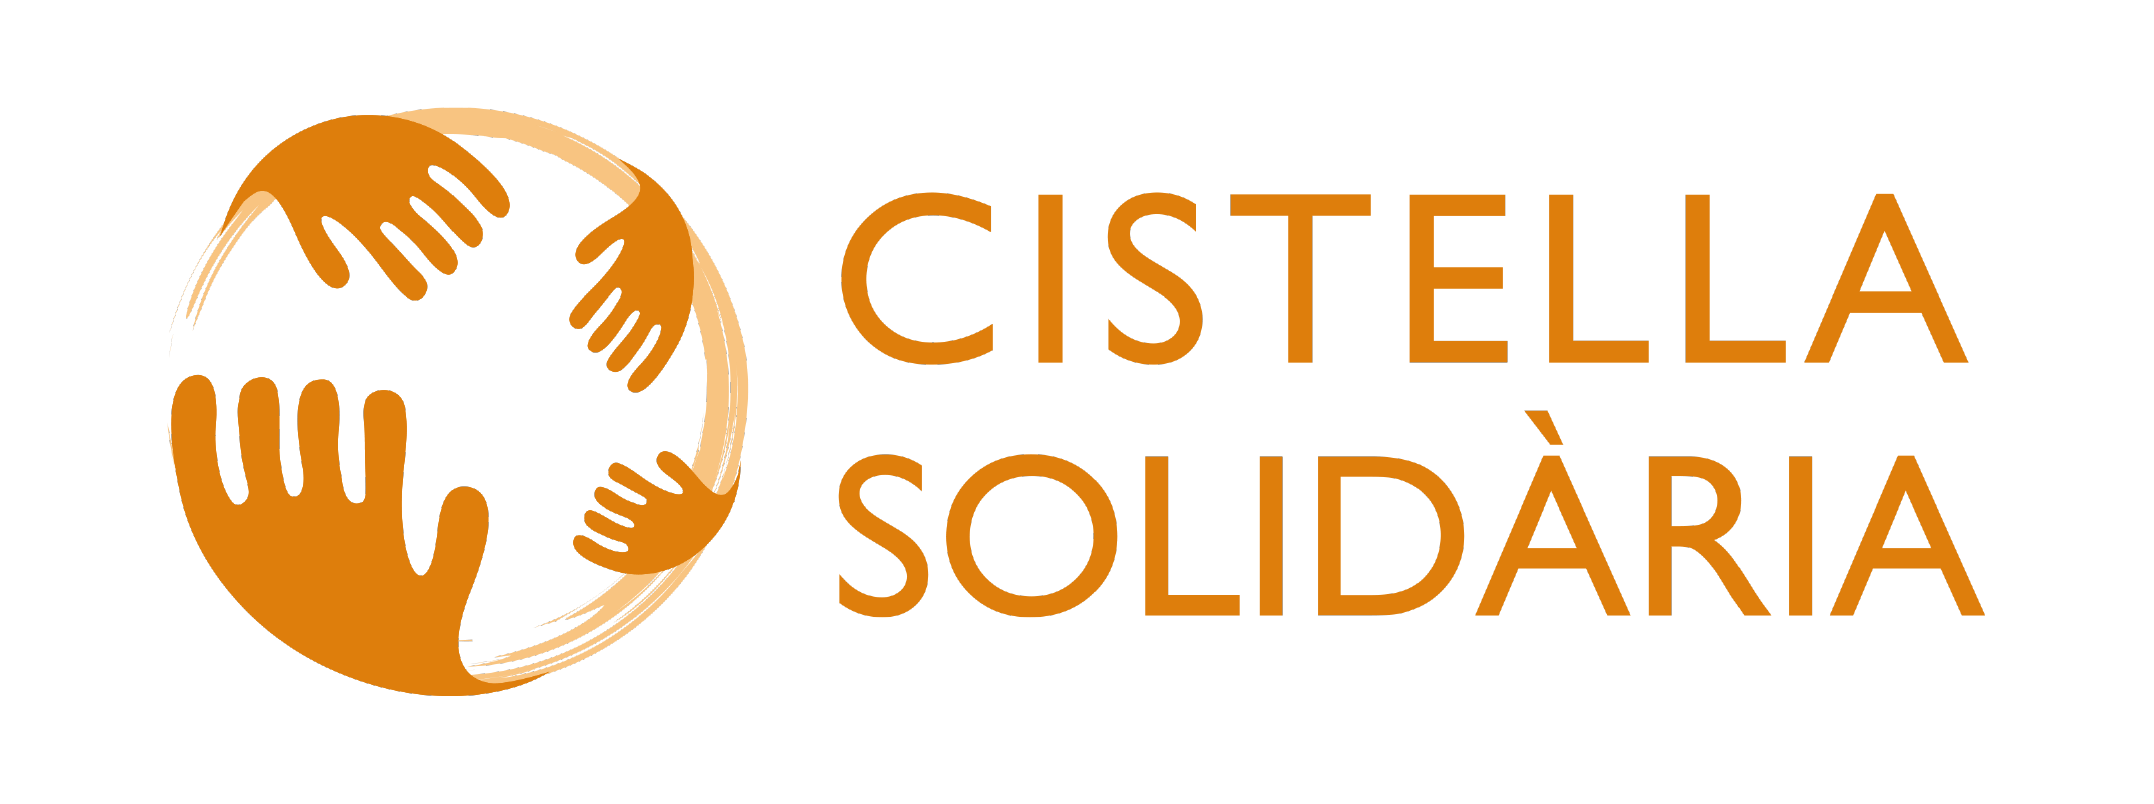 Cistella solidaria